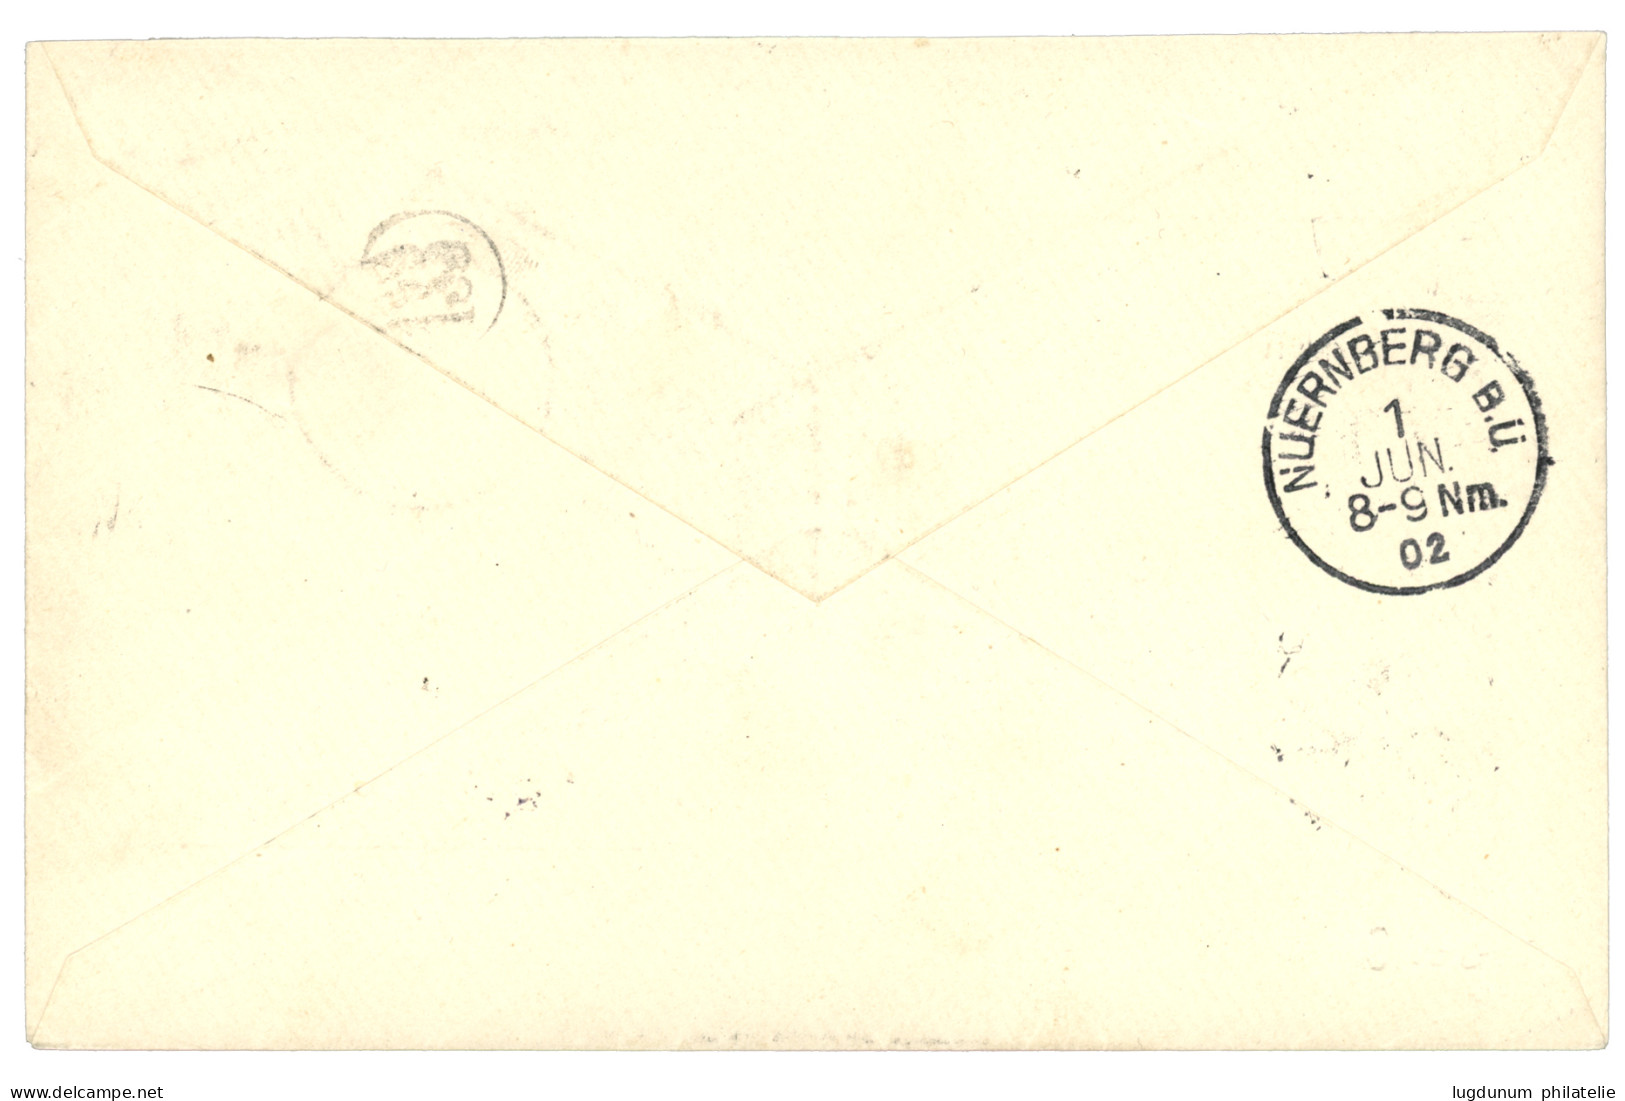 GERMAN SOUTH WEST AFRICA : 1902 40pf Block Of 4 Canc. OMARURU On REGISTERED Envelope To GERMANY. Vvf. - Africa Tedesca Del Sud-Ovest